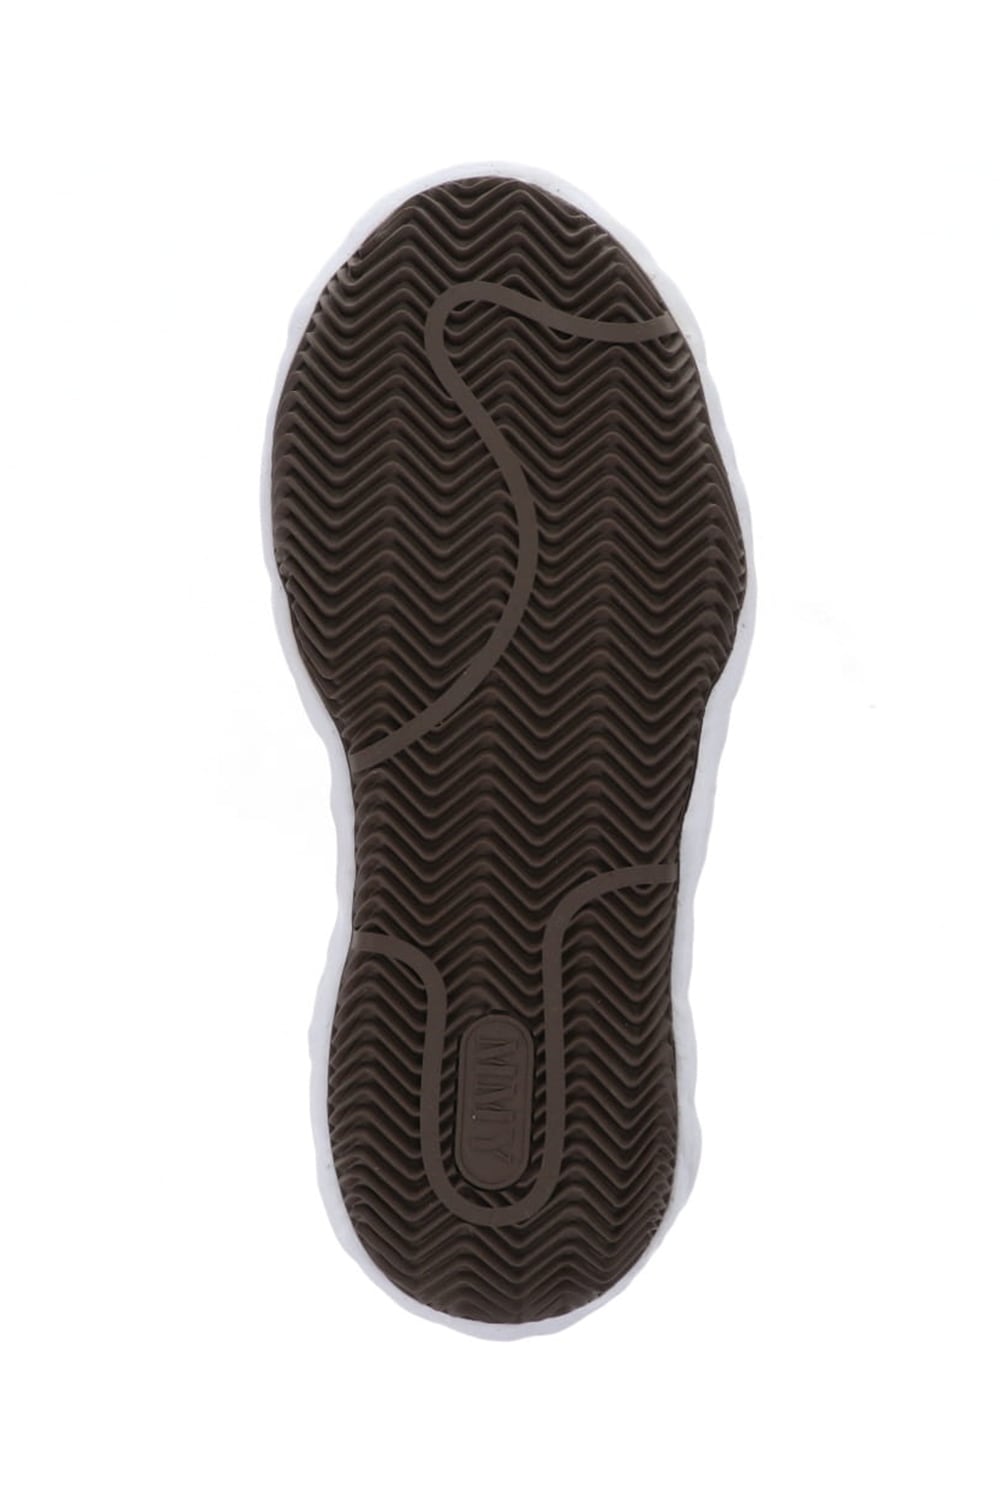 -BLAKEY High- Original STC sole leather Hi-top sneakers Black